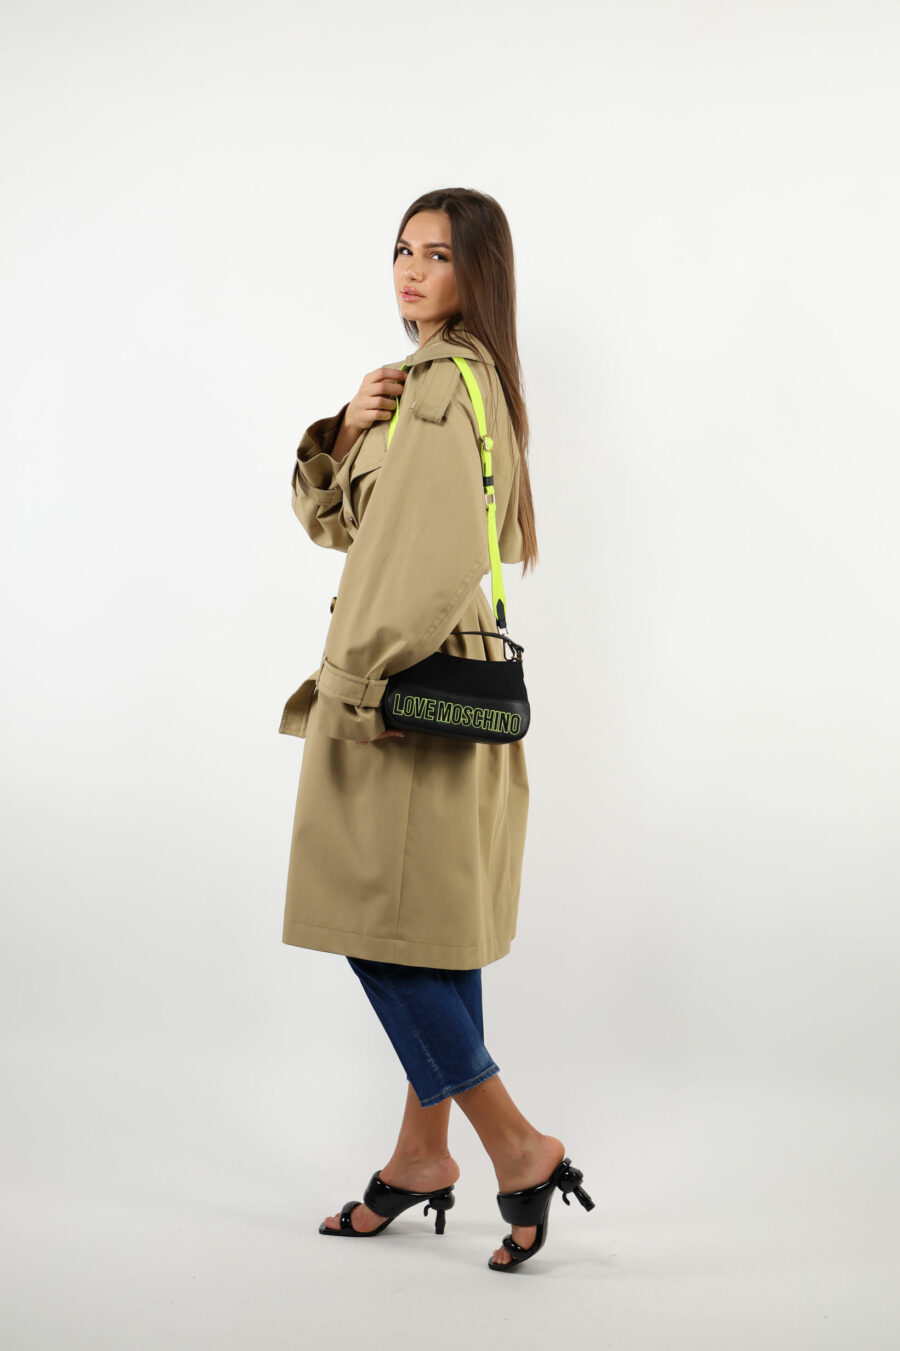 Shoulder bag with lime green maxilogo - 109902